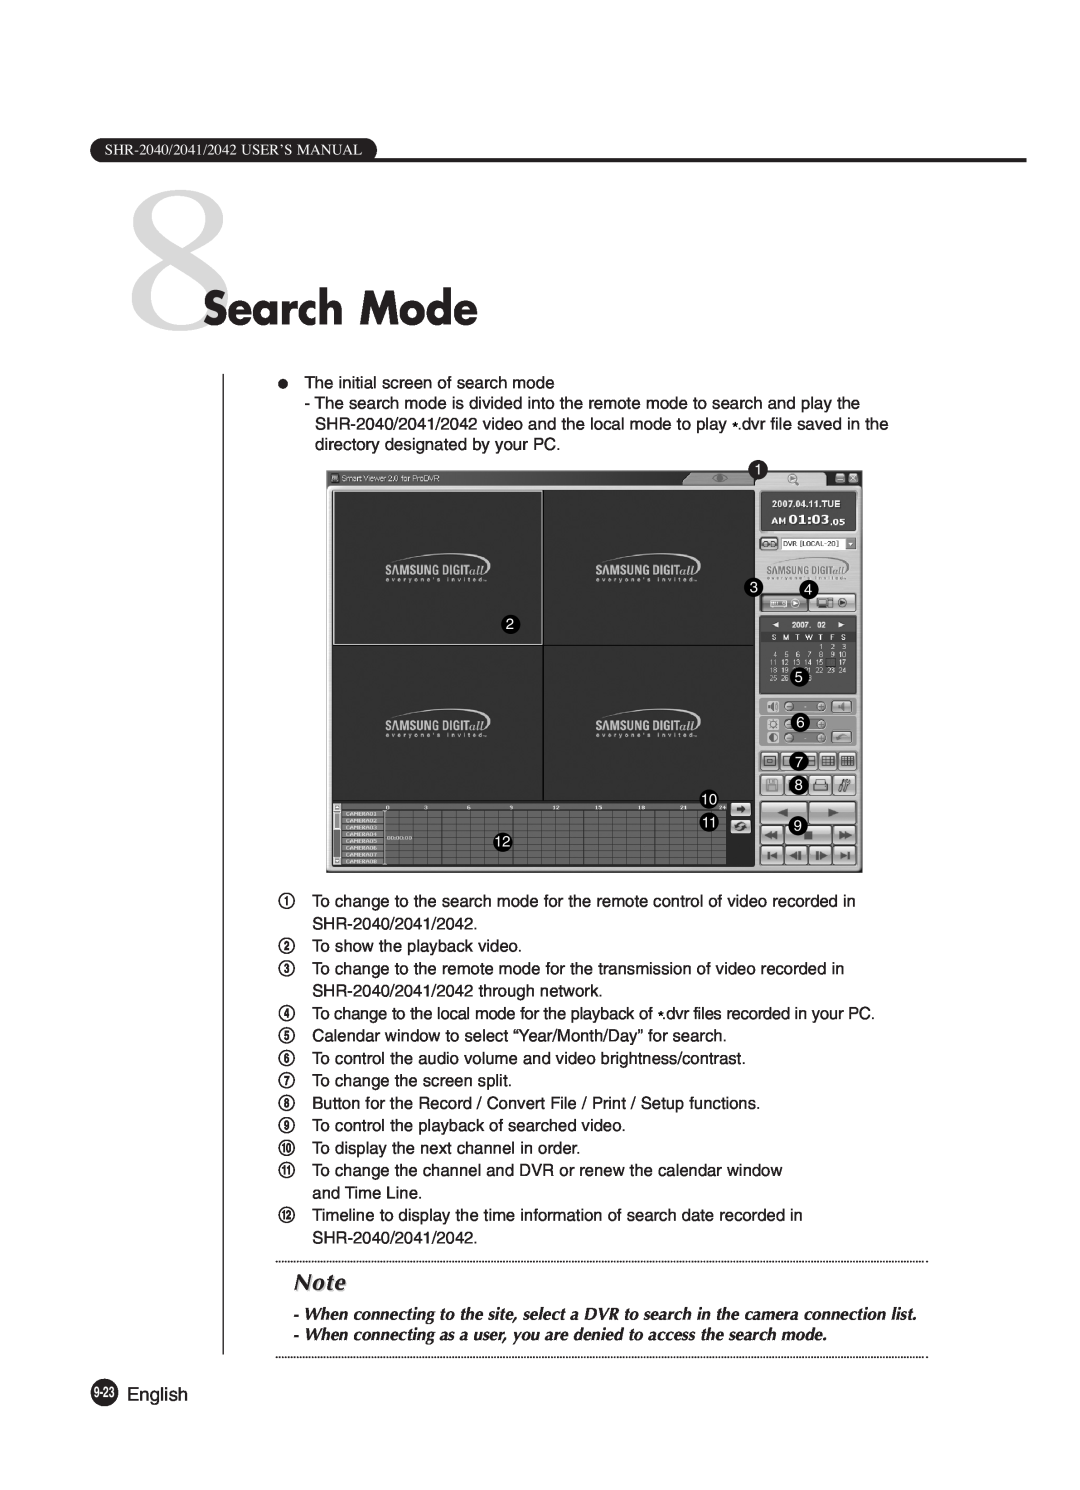 Samsung SHR-2042P250, SHR-2040P250 manual 8Search Mode, English 